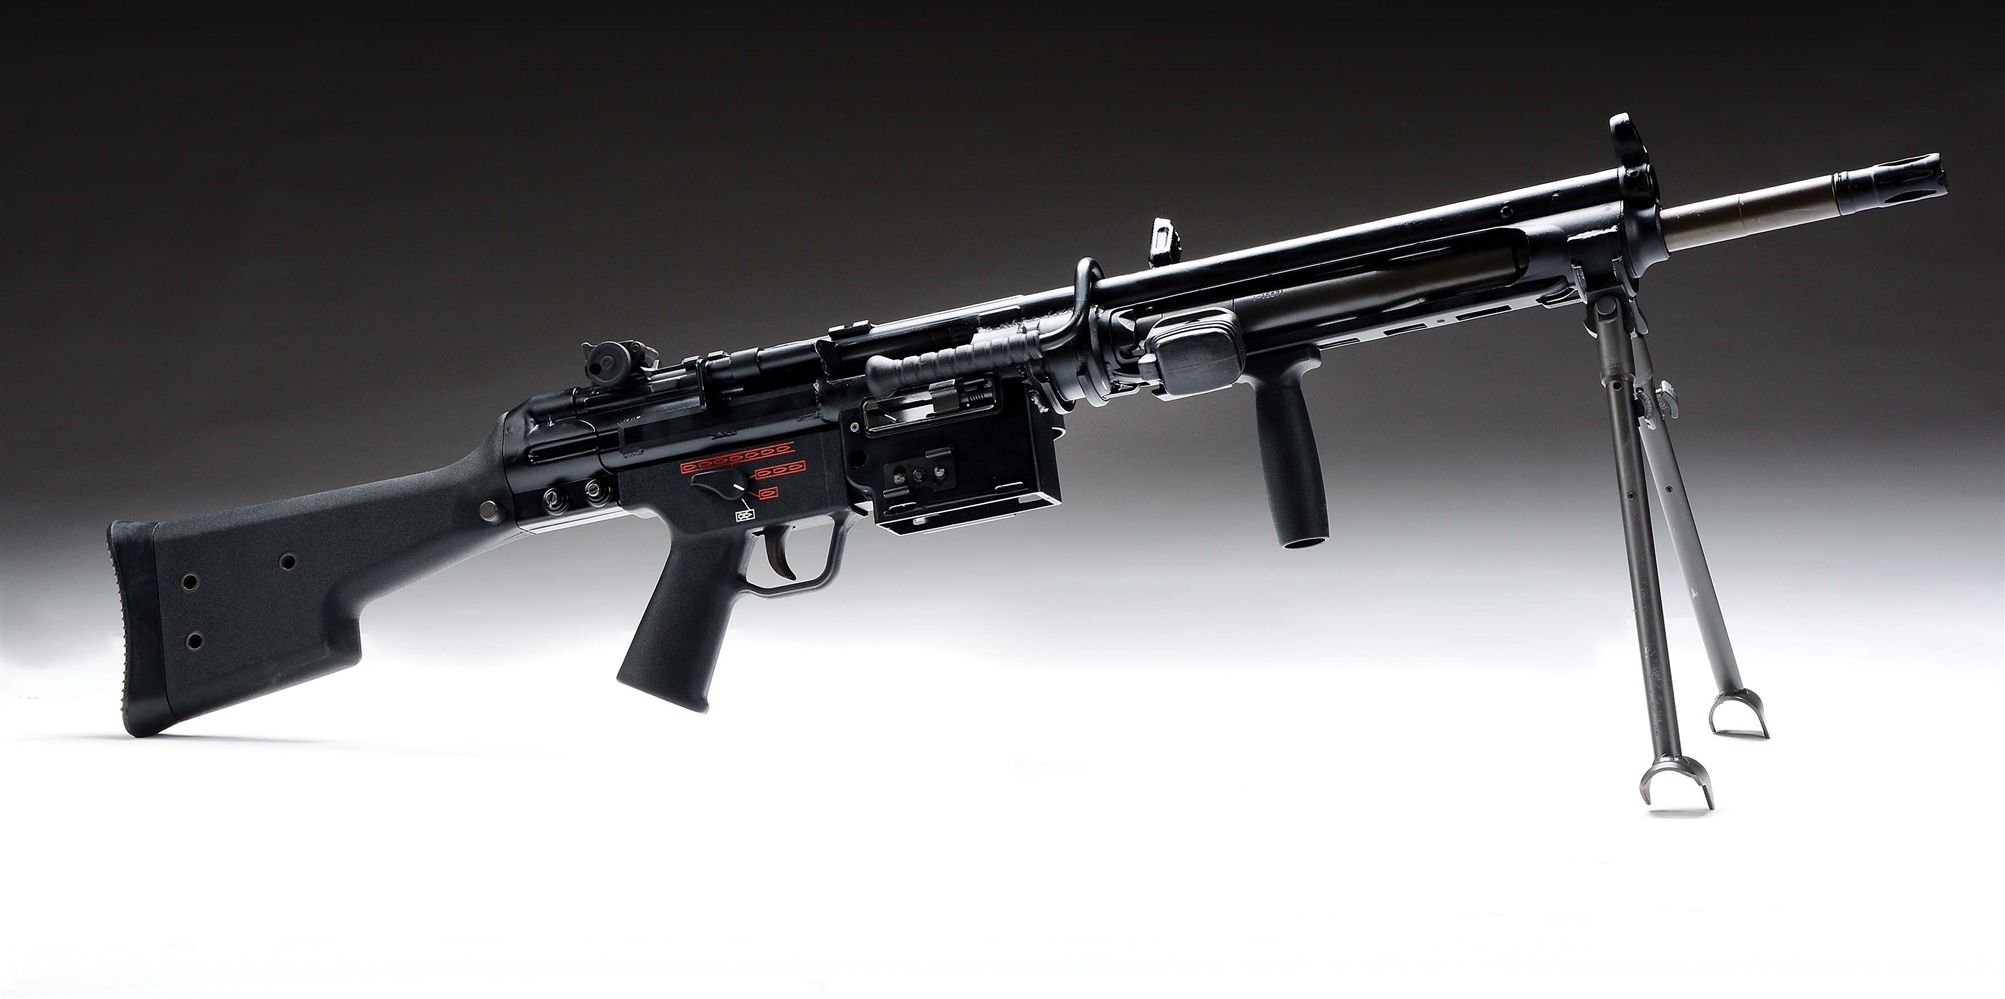 (N) ABSOLUTELY FANTASTIC H&K MULTI-CALIBER AUTO TRIGGER PACK ON H&K 21E BELT FED & MAG FED HEAVY BARRELLED MACHINE GUN.